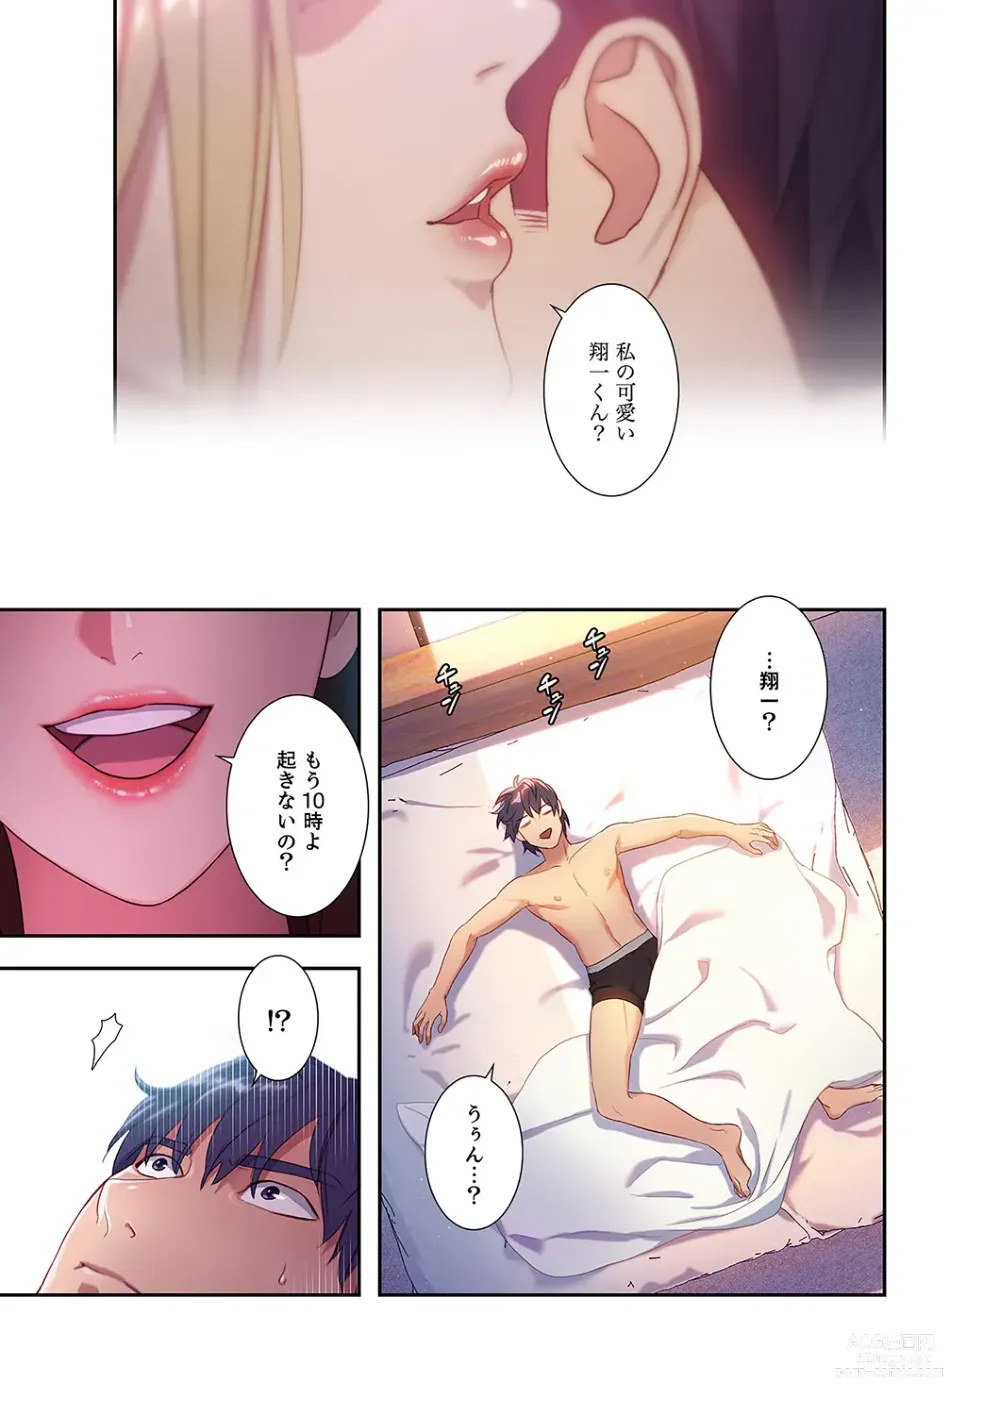 Page 9 of manga Harem x Harem 01